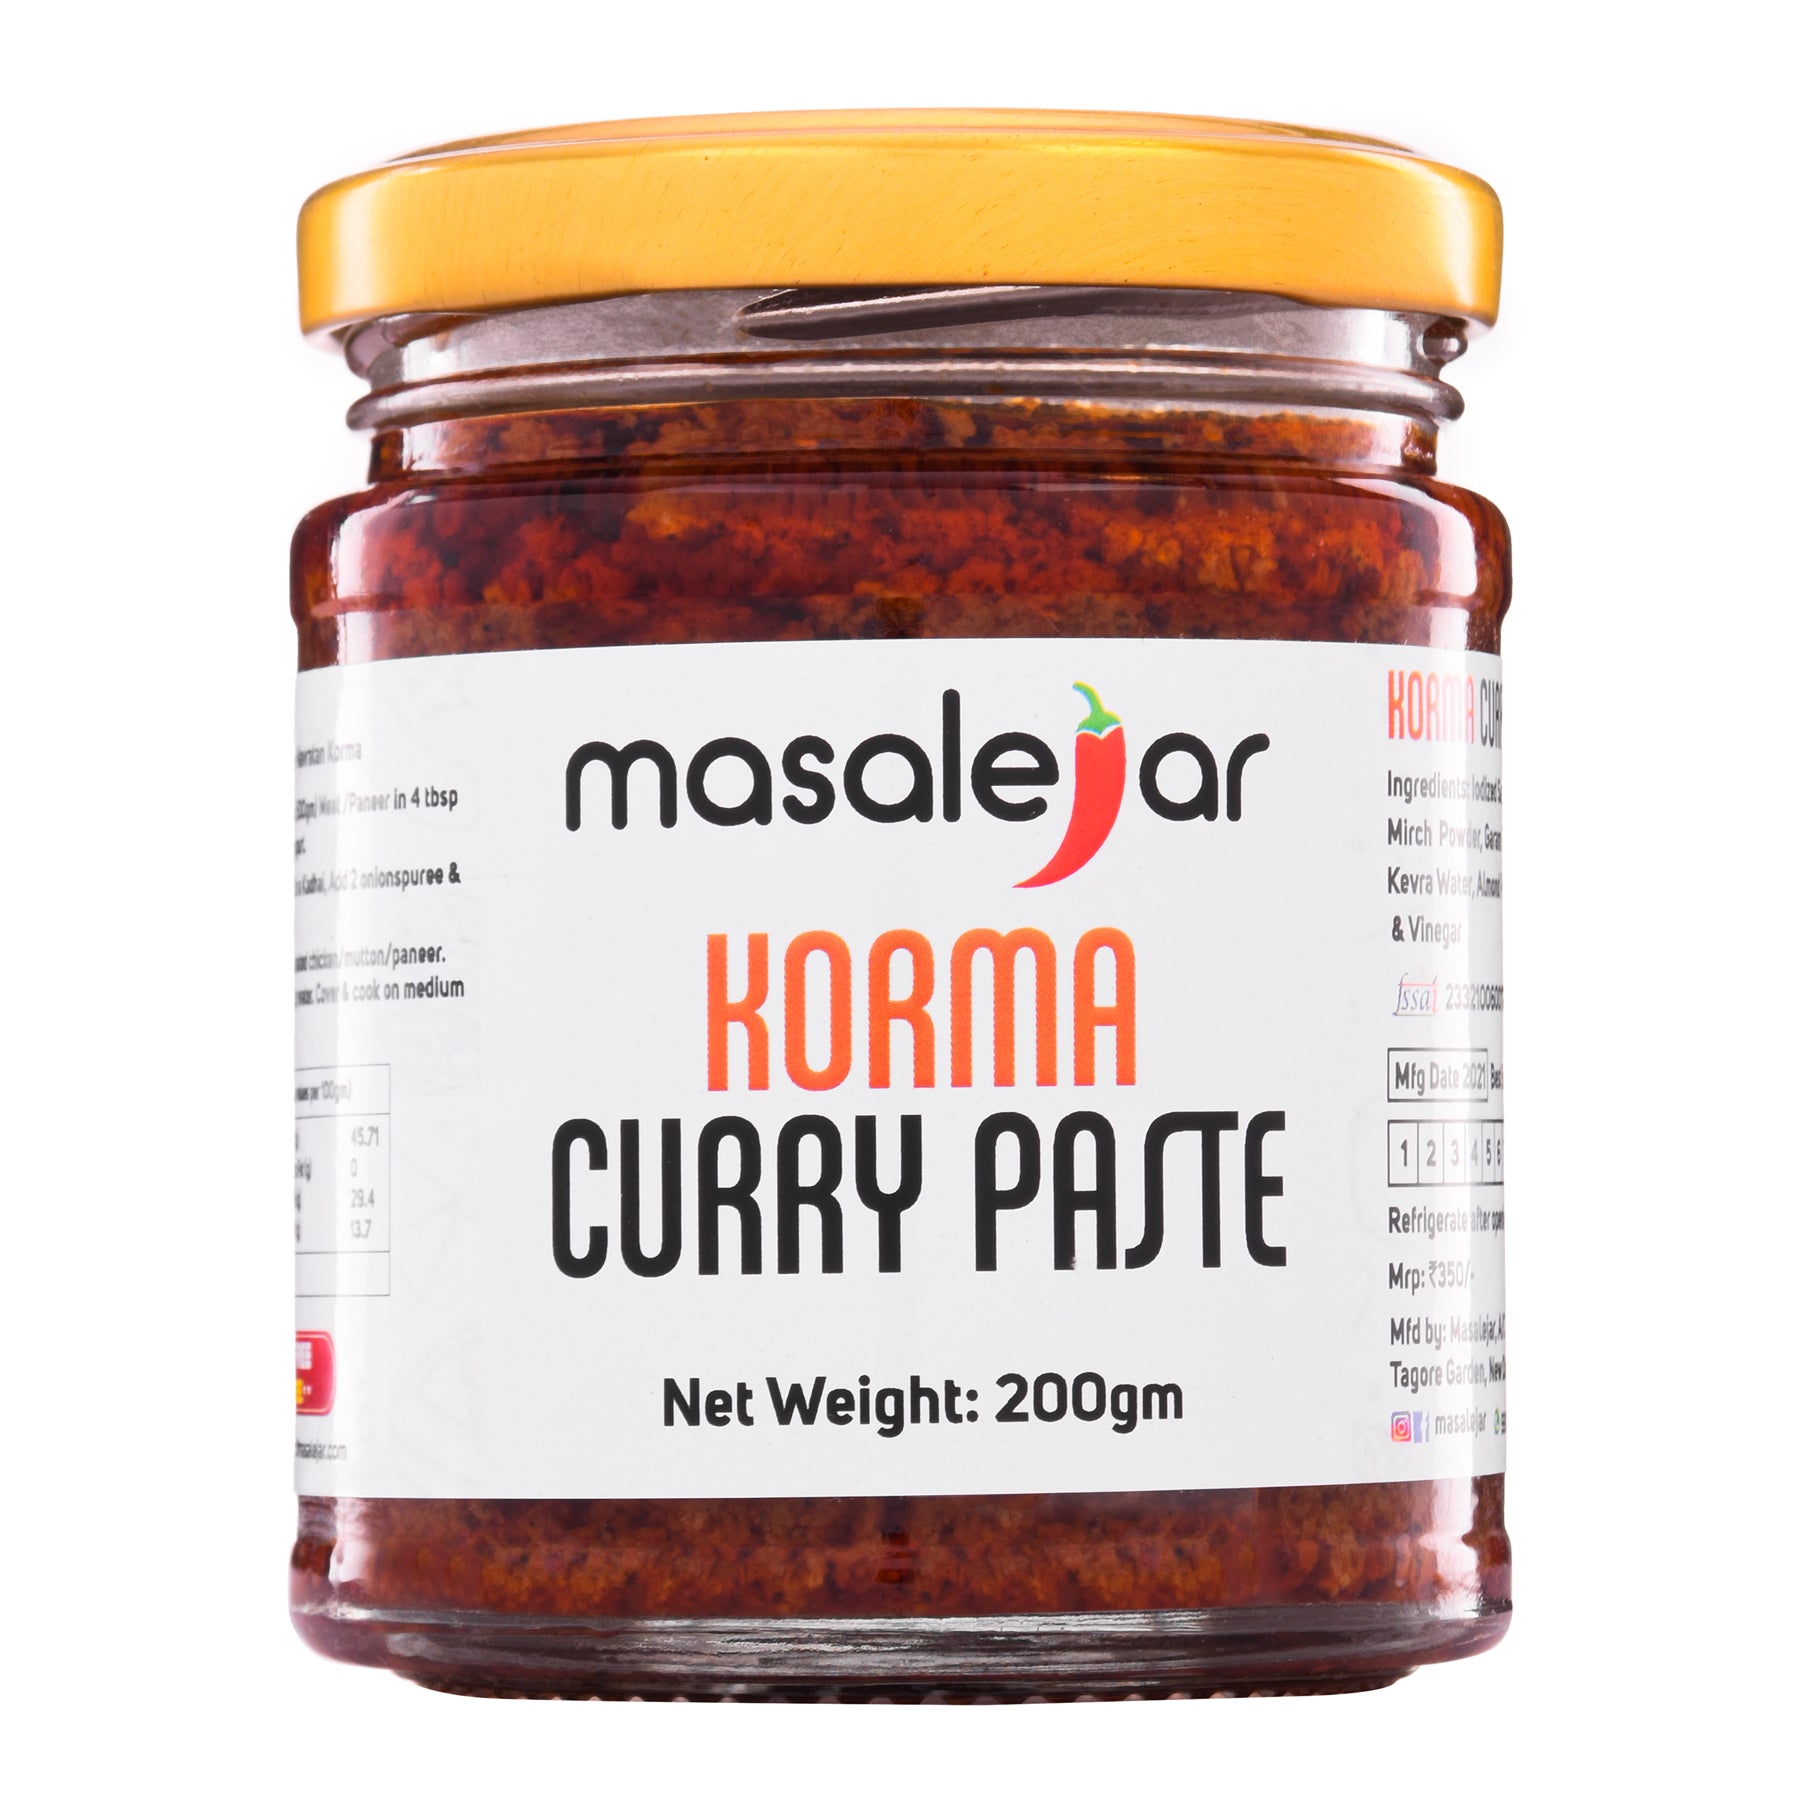 Masalejar Korma Curry Paste 200gm (Serves 4-5)